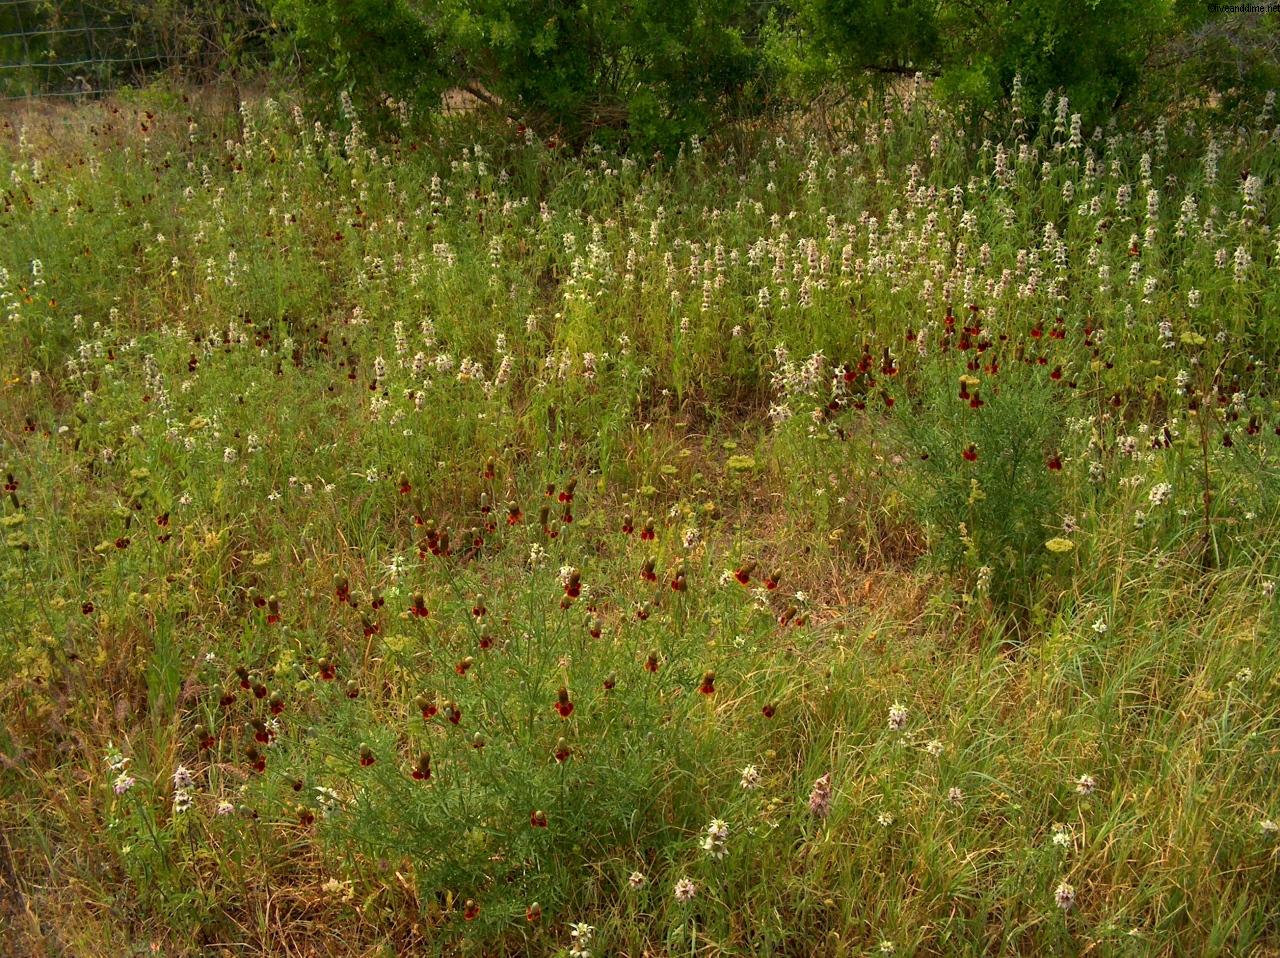 Kingsville, Texas Wildflowers - April 10, 2005